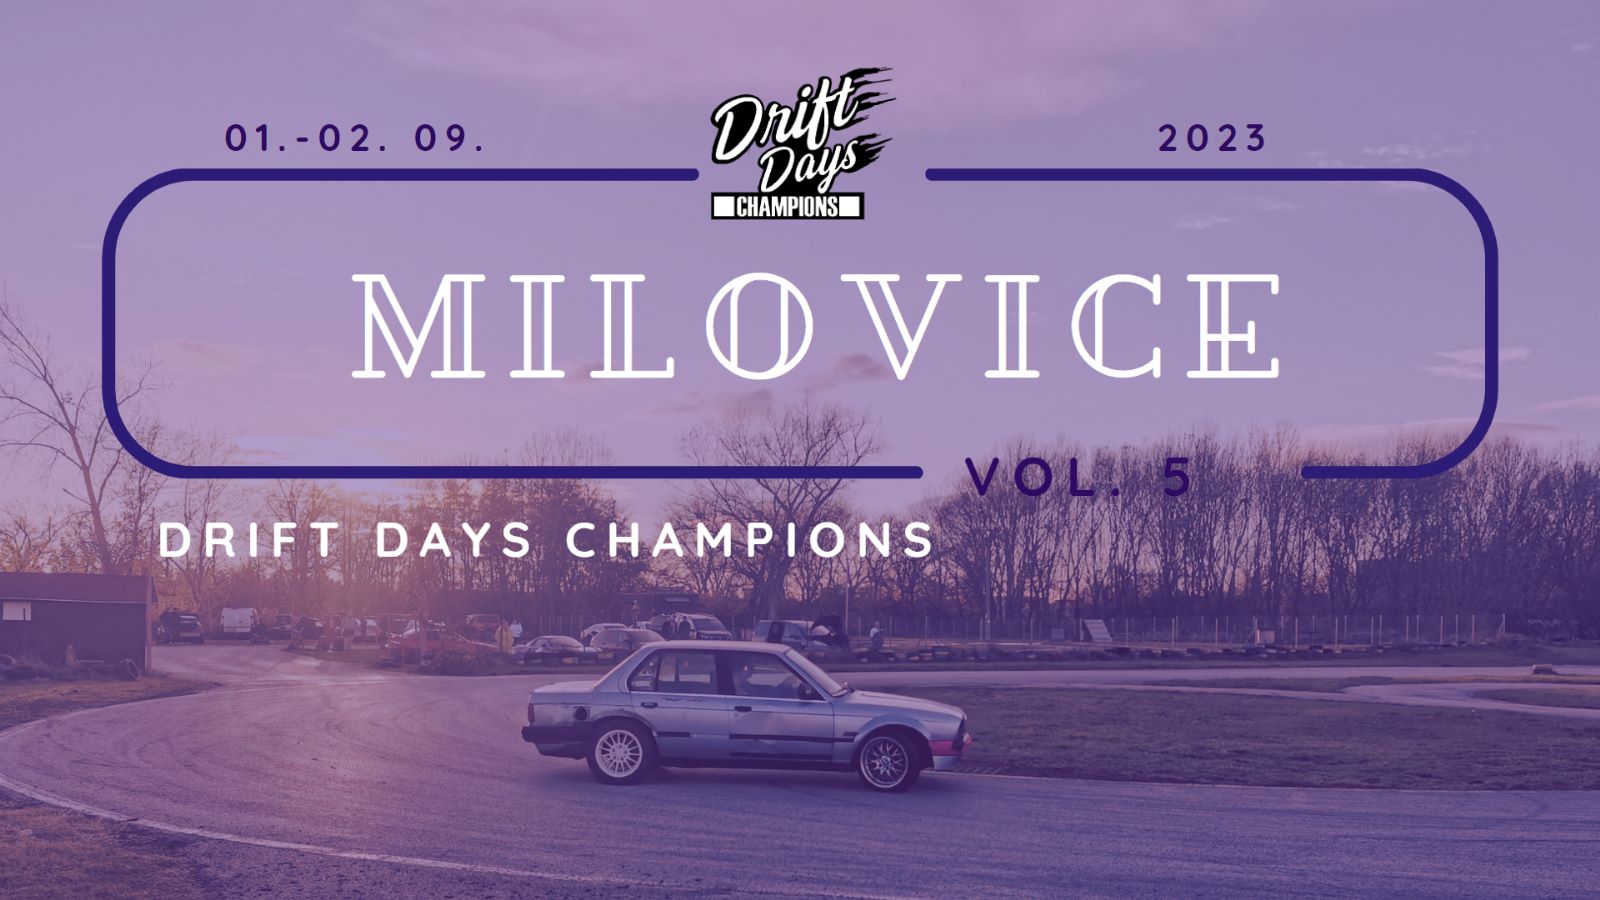 Drift Days Champions Milovice vol.5